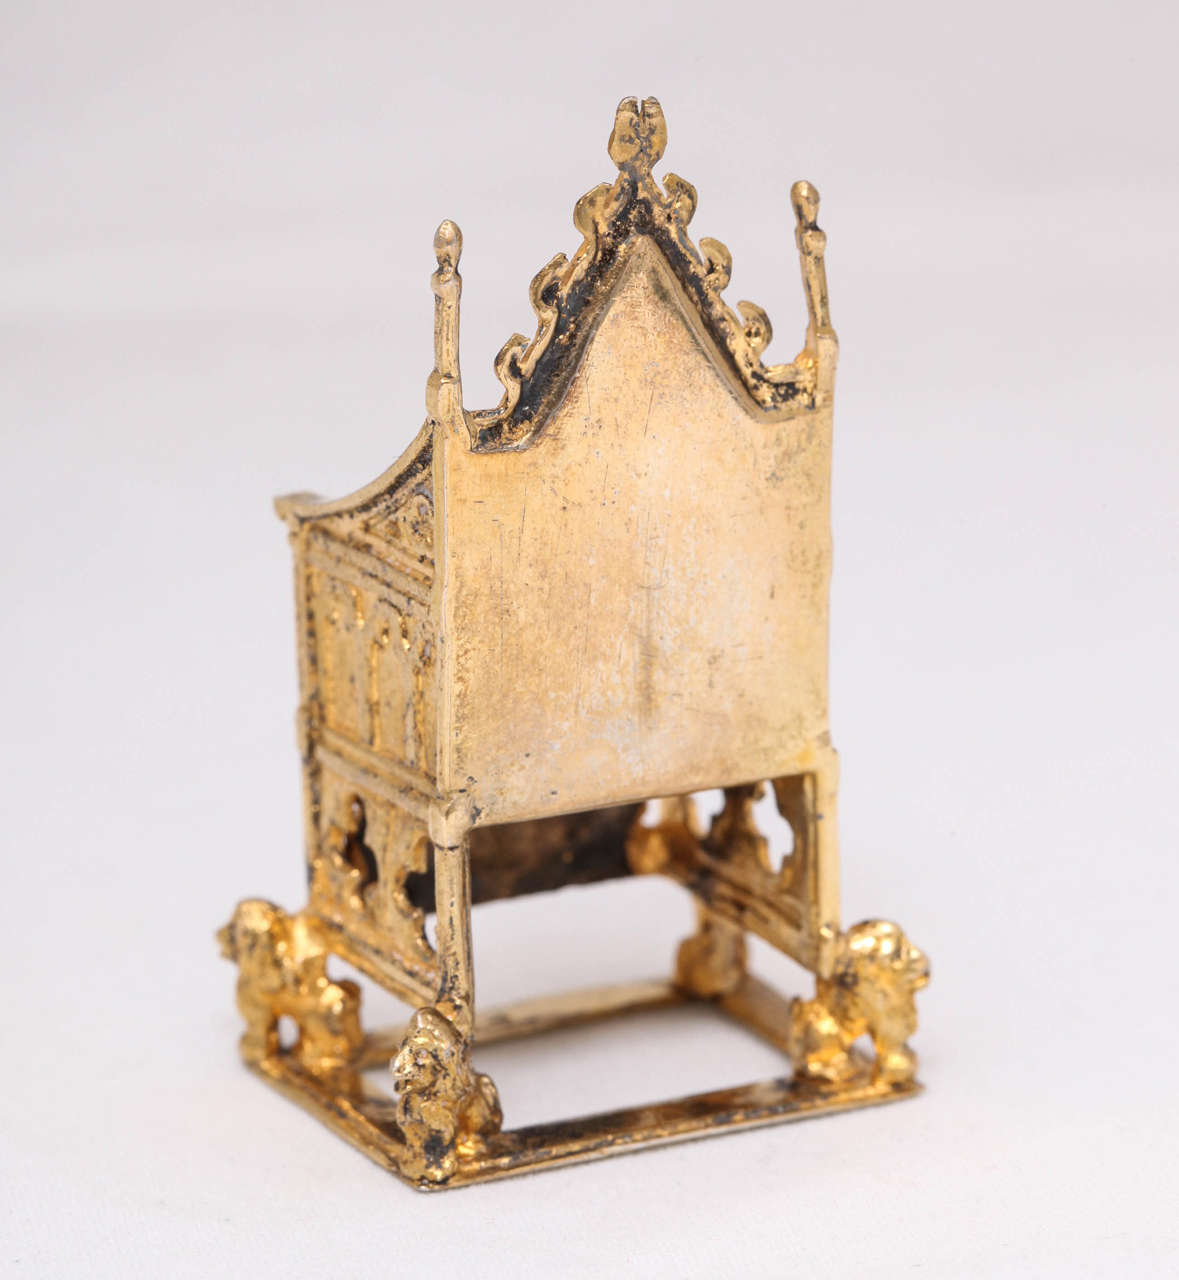 British Edwardian Sterling Silver-Gilt Miniature Coronation Throne or Chair